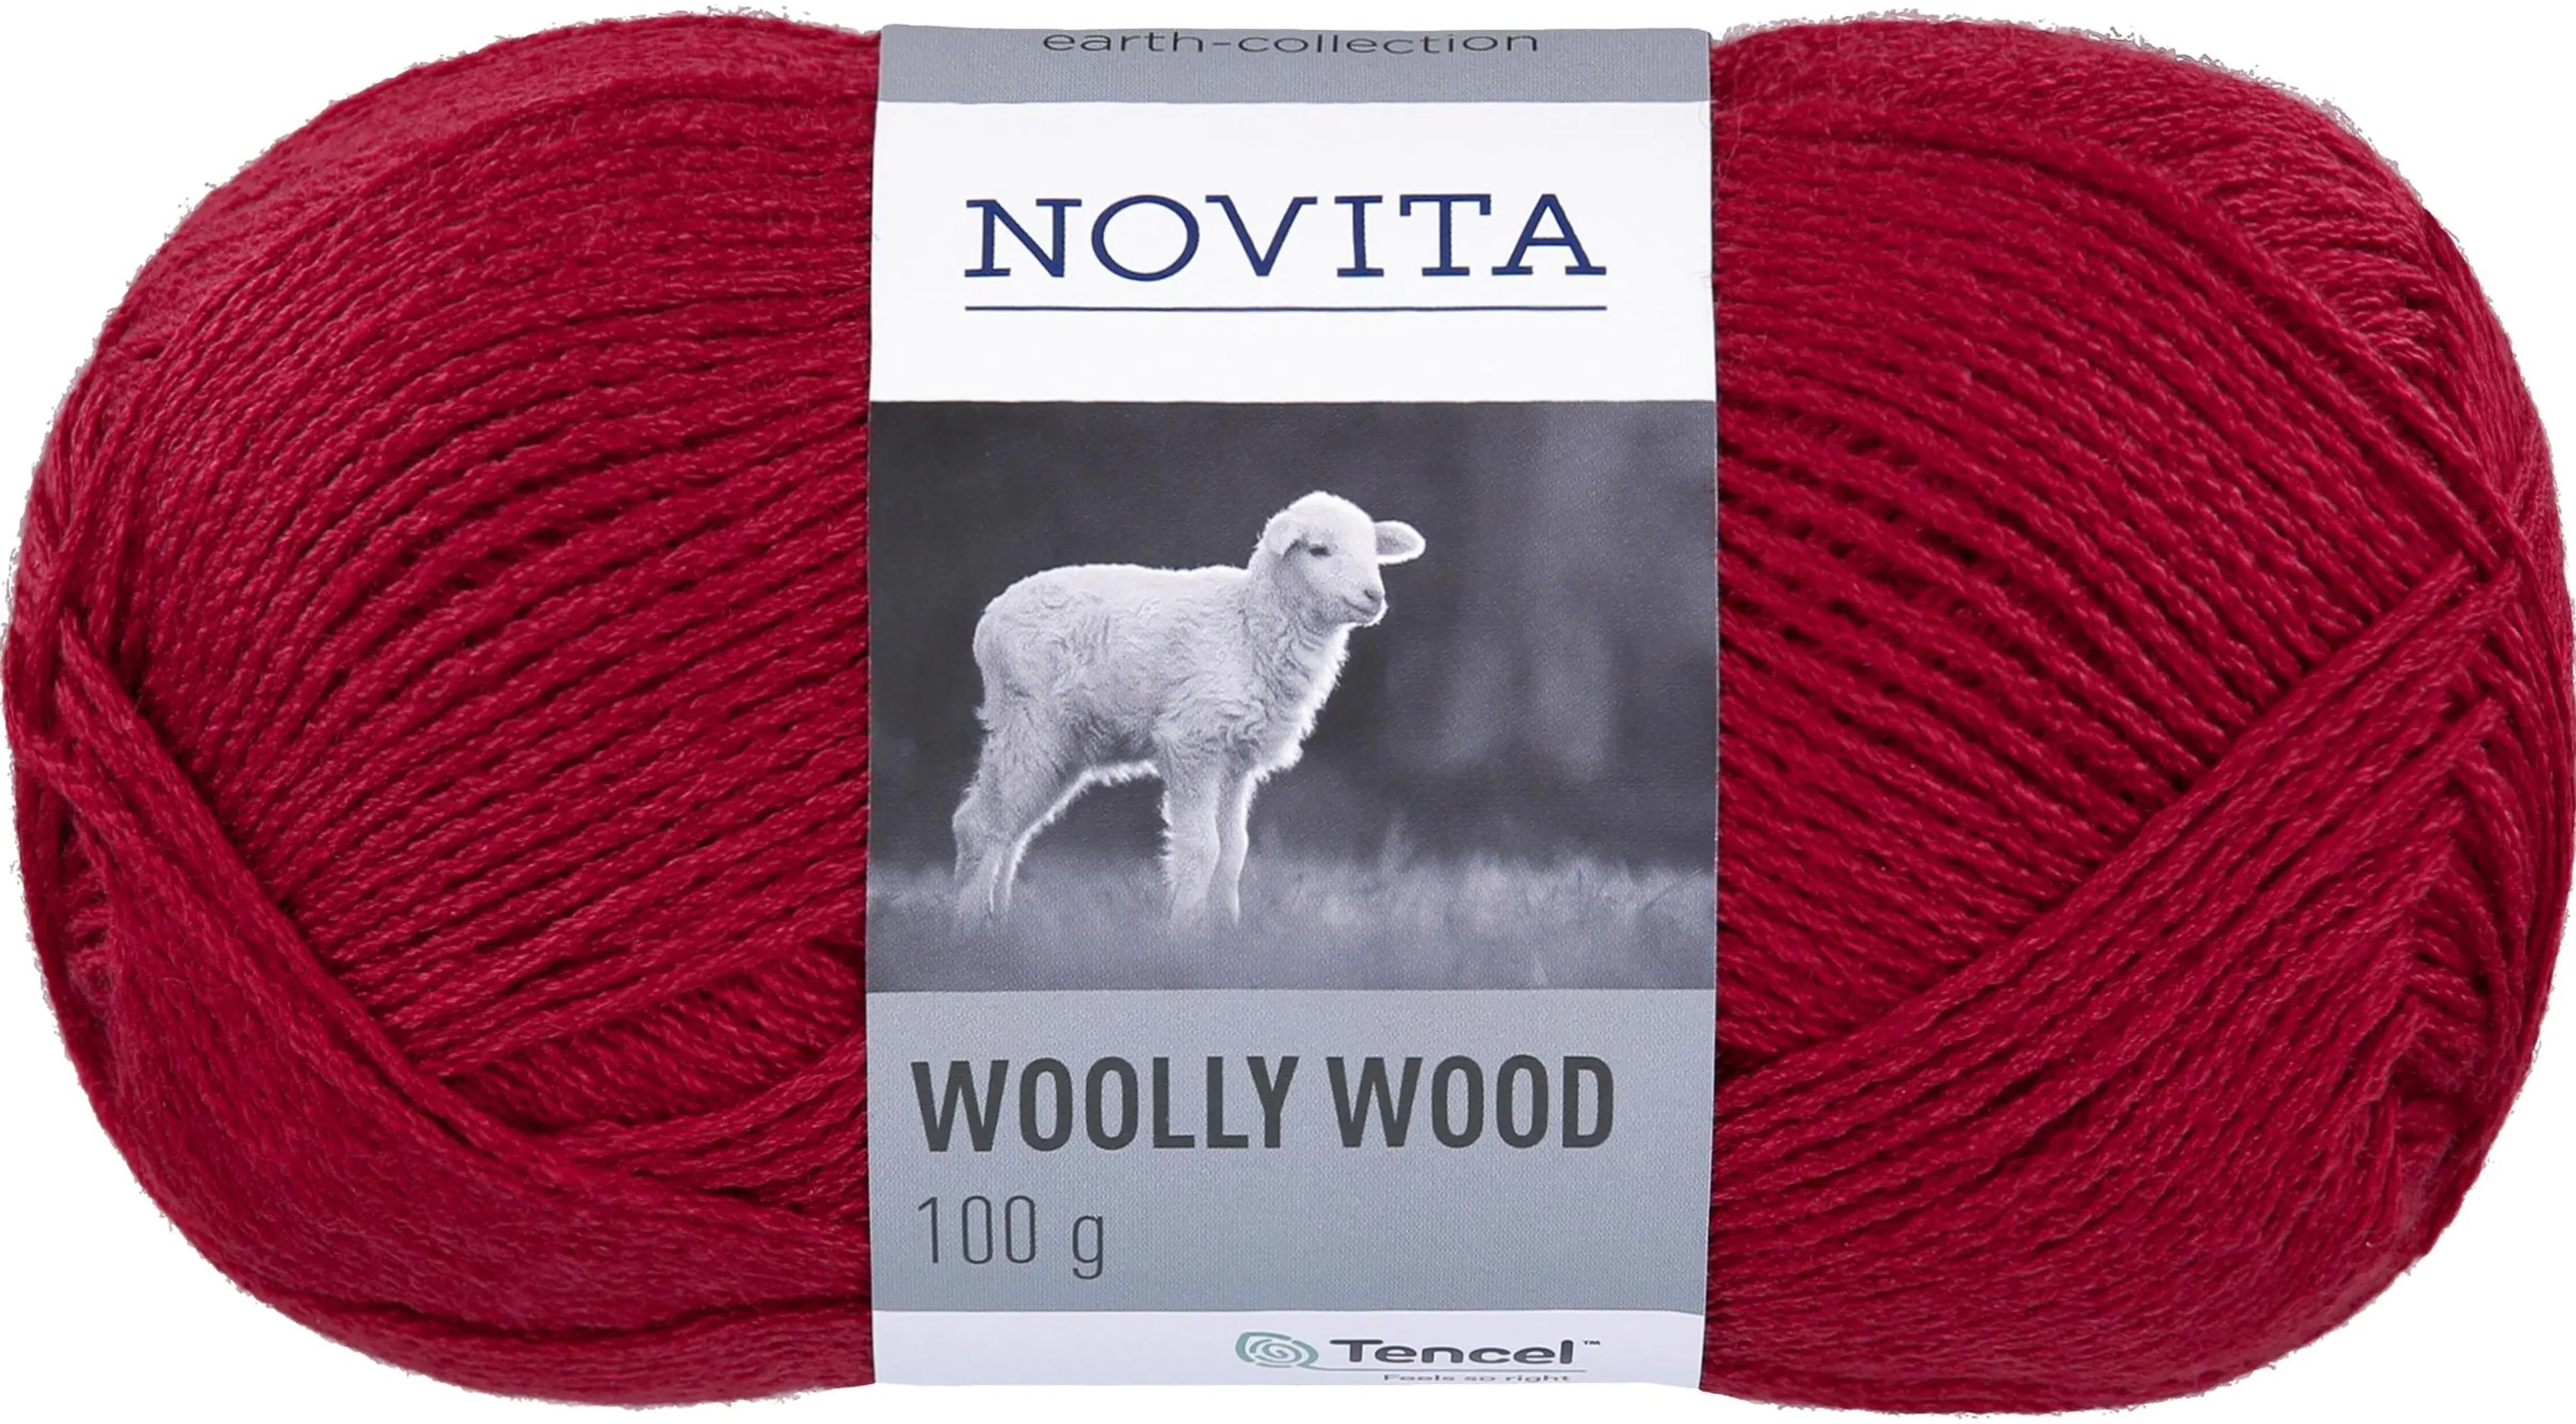 Novita Woolly Wood 100g 587 KARPALO